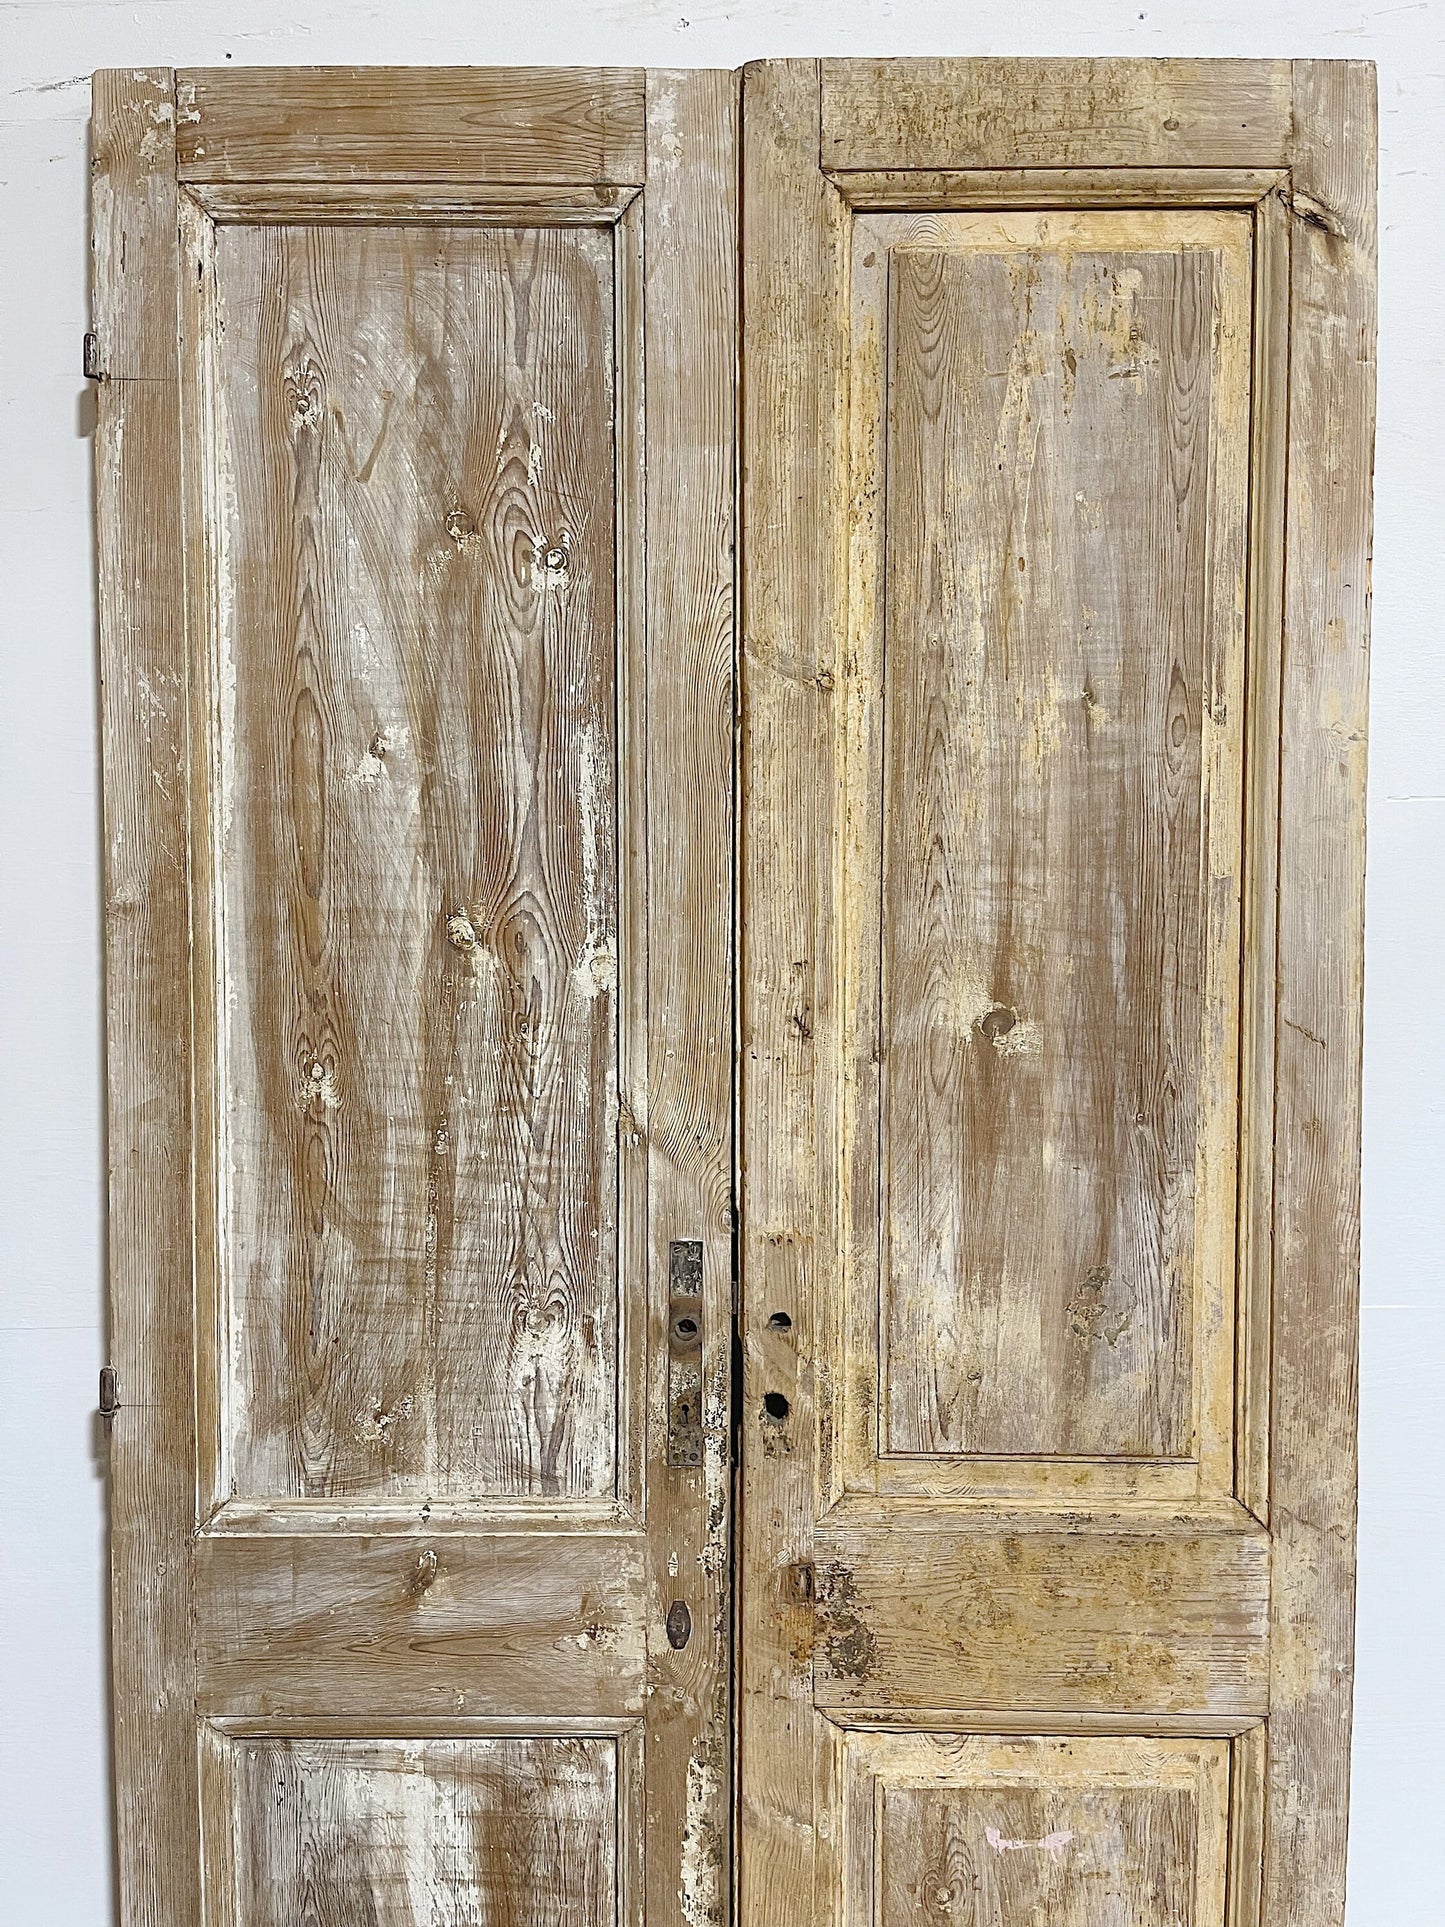 Antique French doors (92.75x44.5) E1201